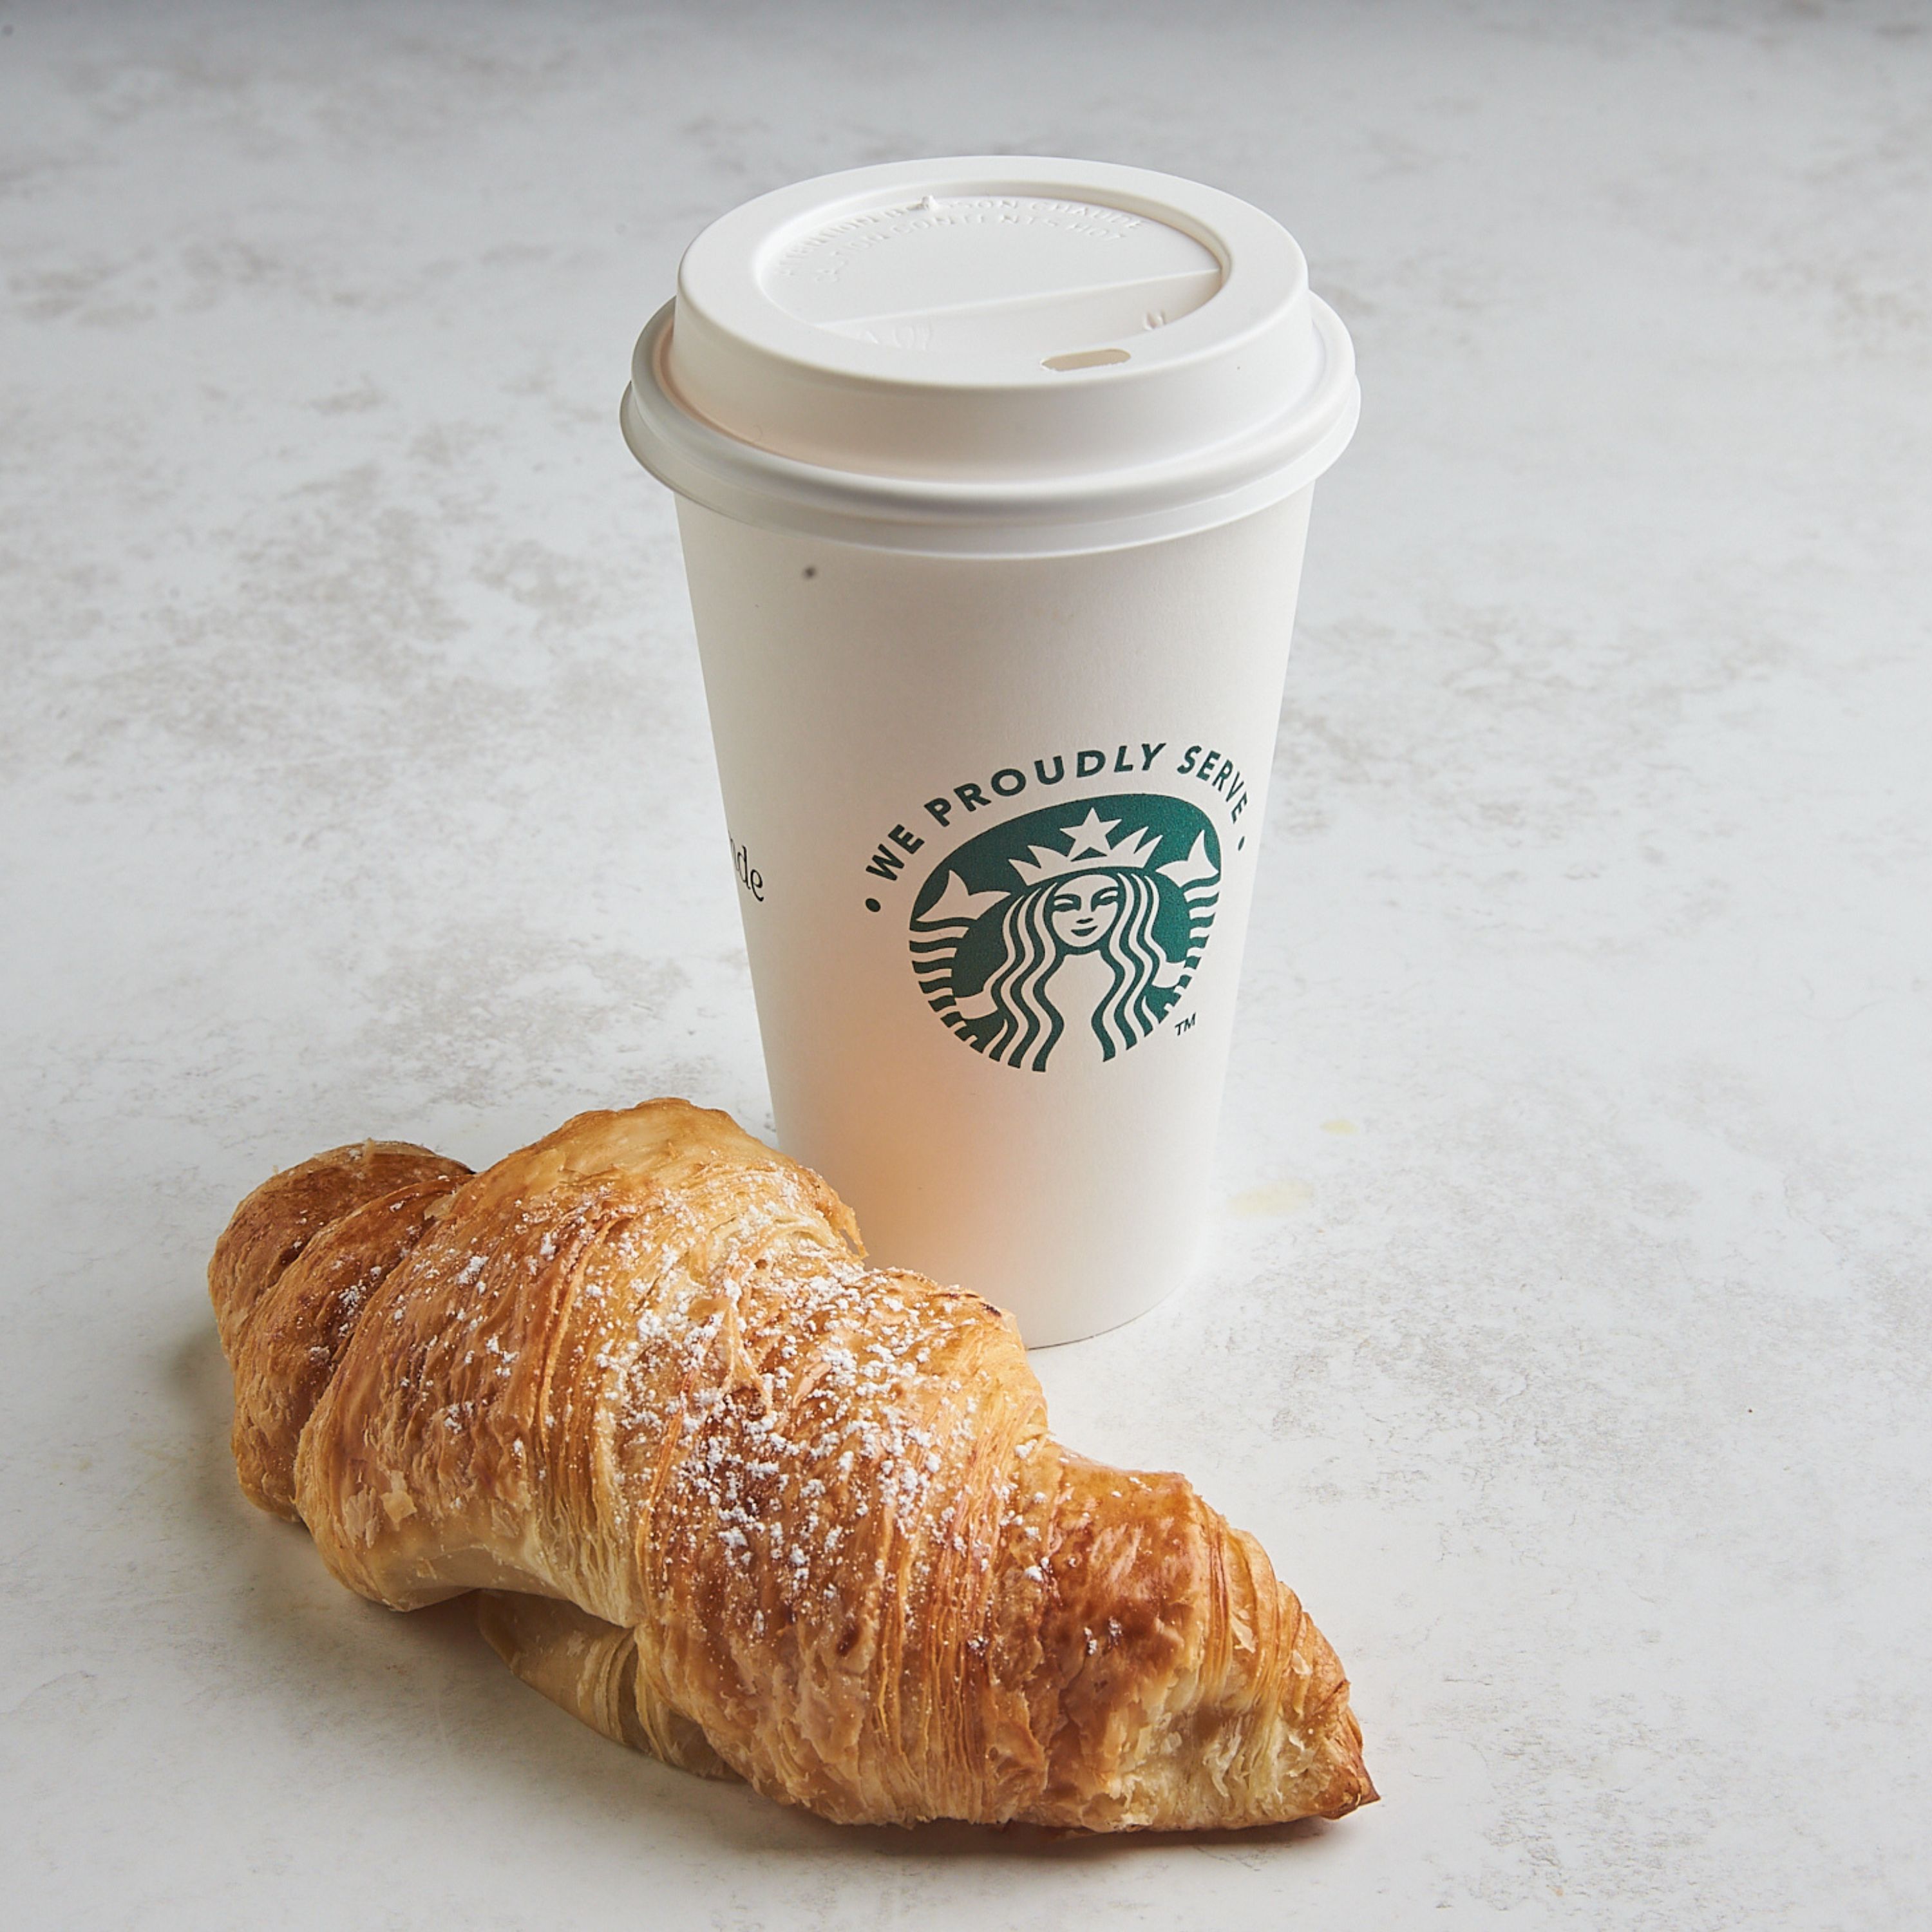 Starbucks coffee and croissant